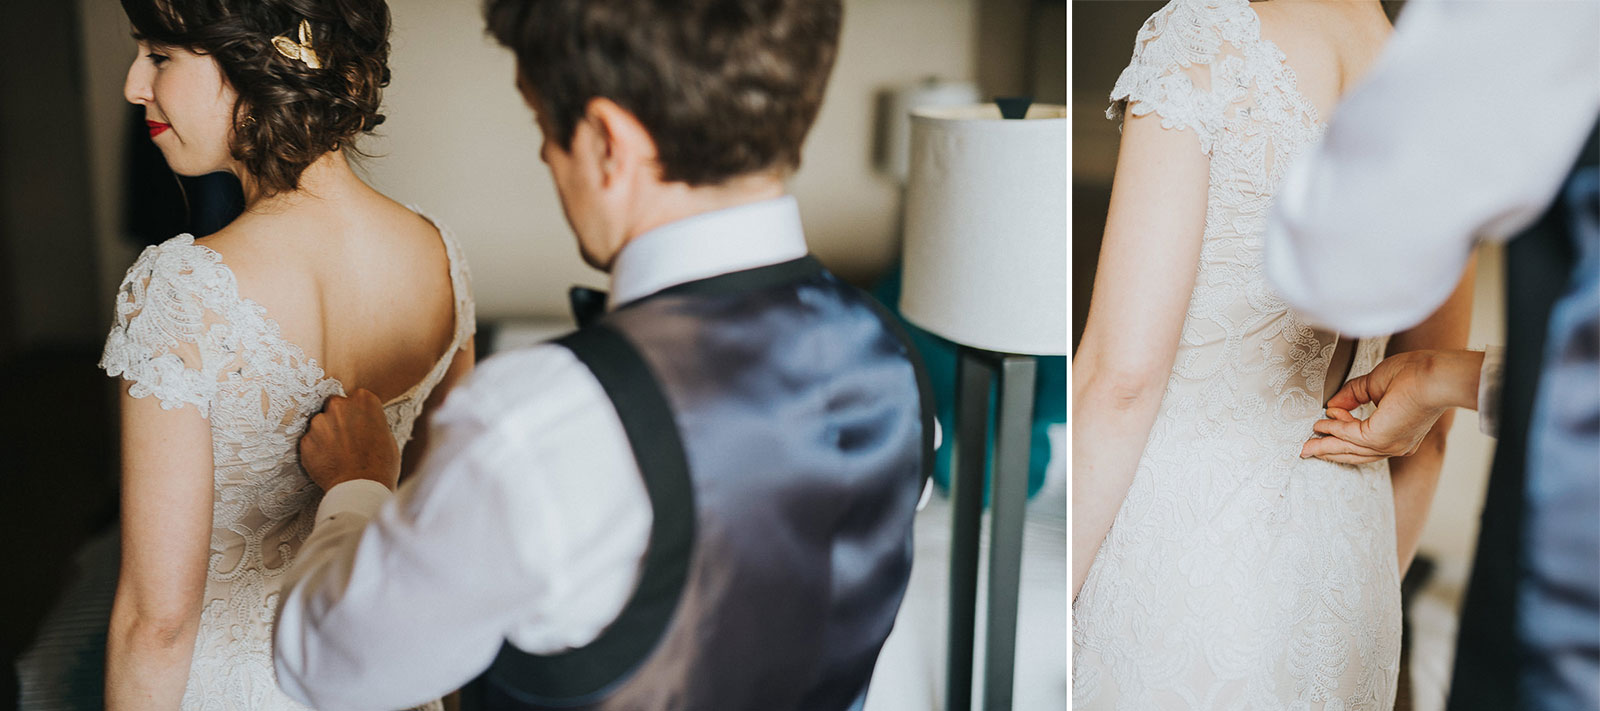 12-groom-zipping-up-brides-dress